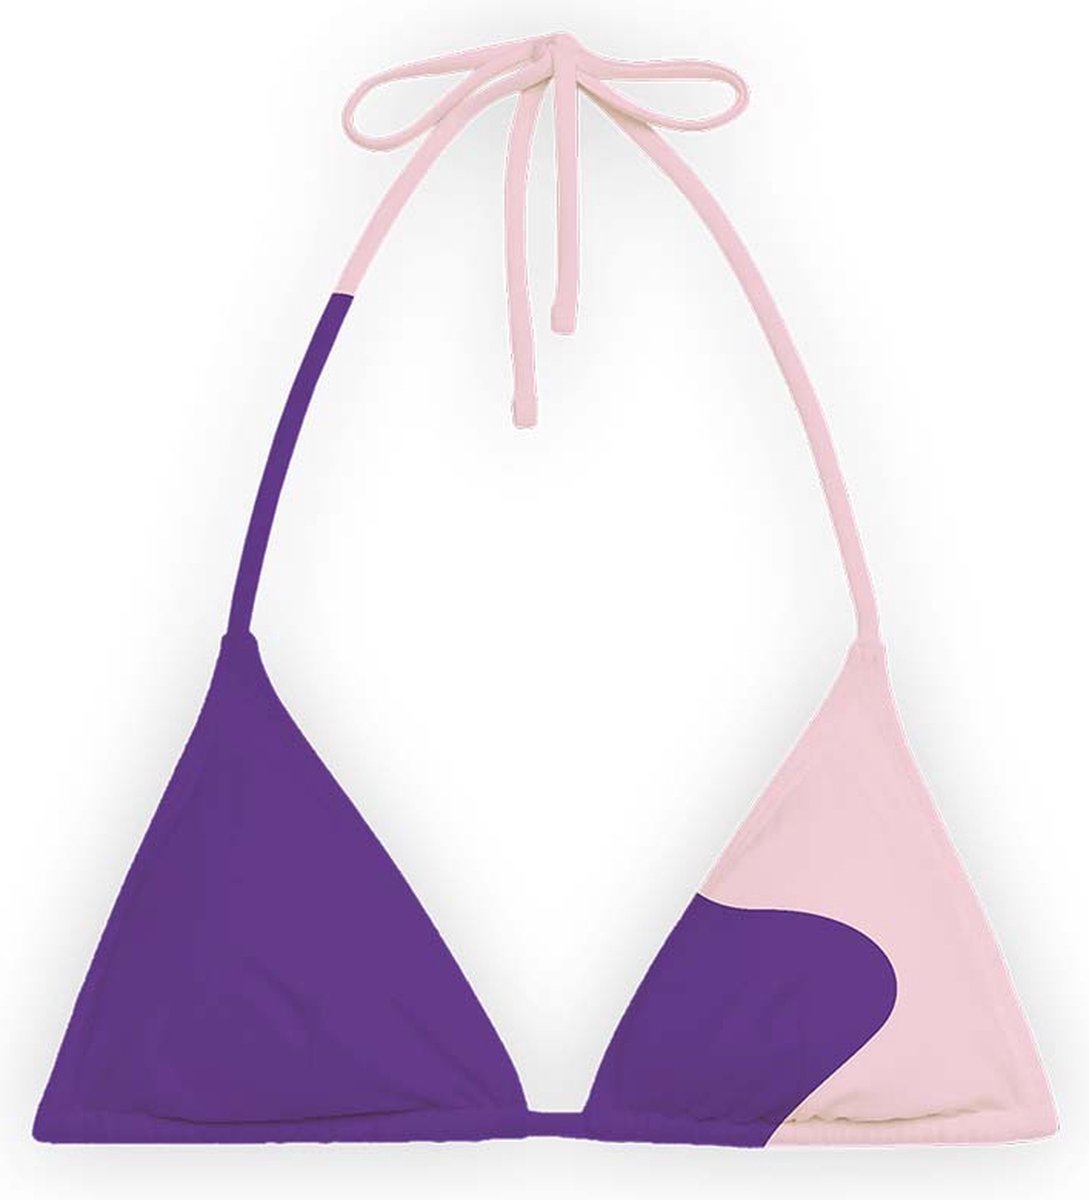 Sea'sons Official - Kleurveranderend - Triangle Bikini Top - Paars-Roze - XS